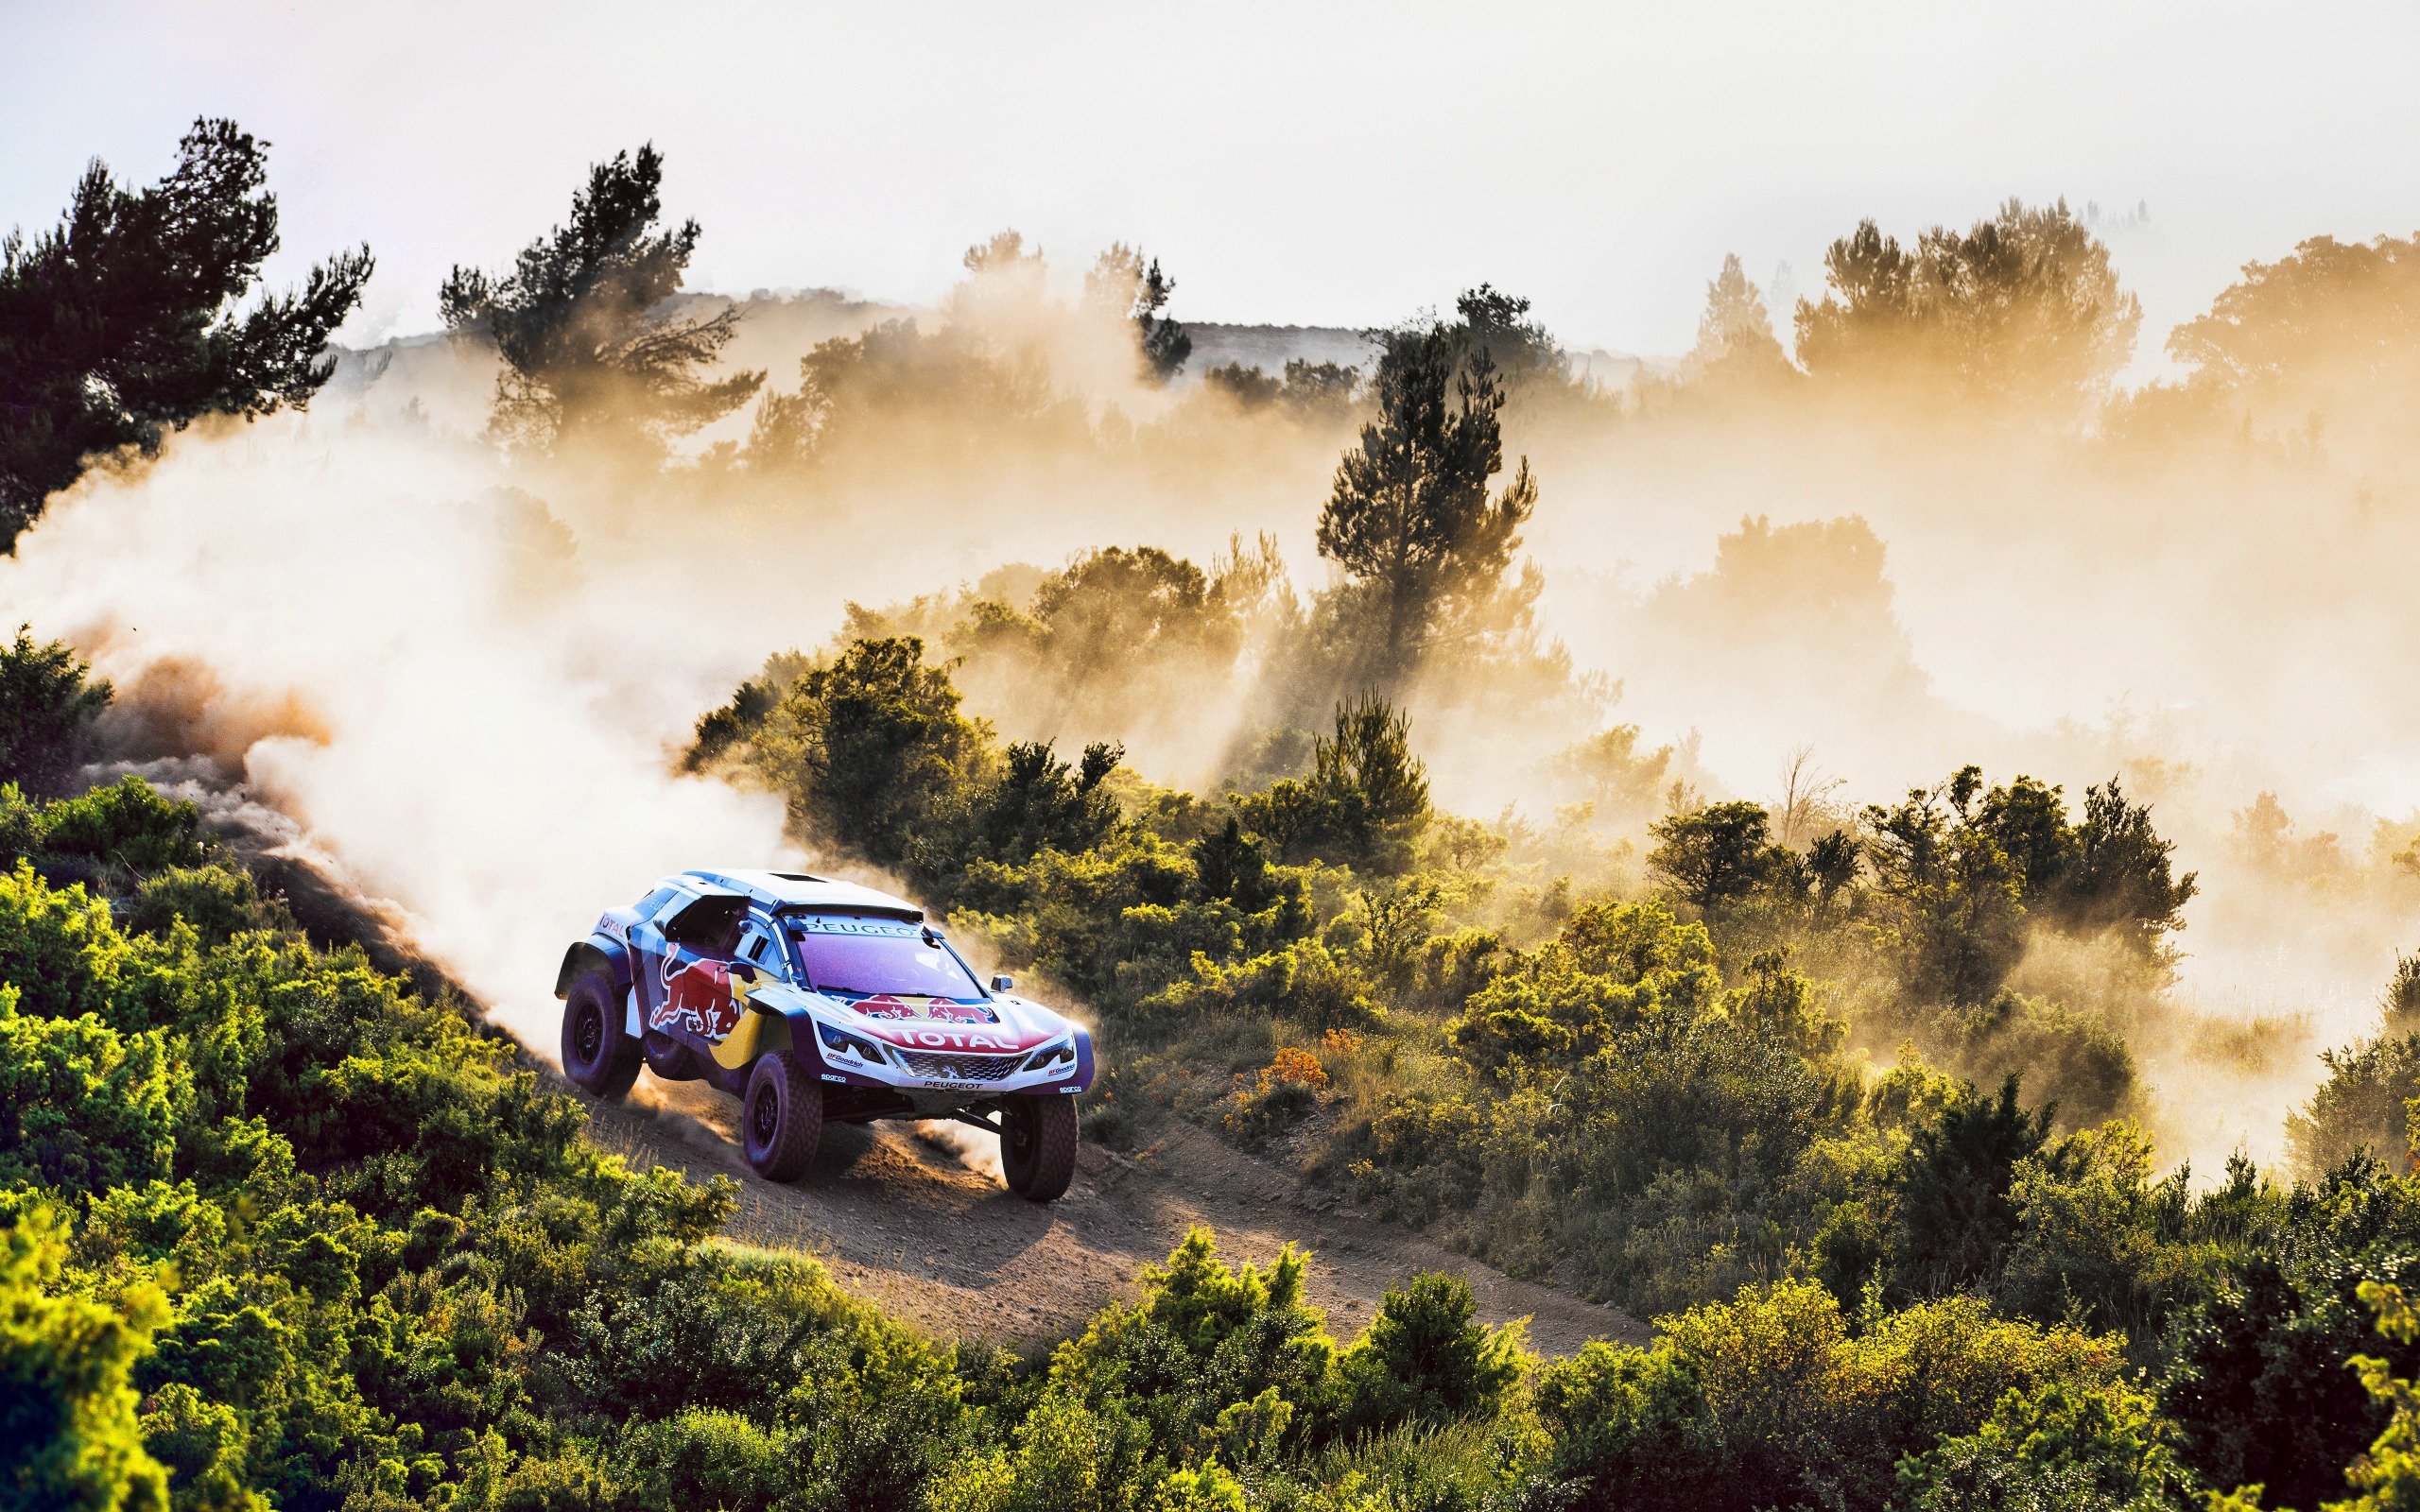 Download wallpaper Peugeot Dakar Rally Dune buggy, race